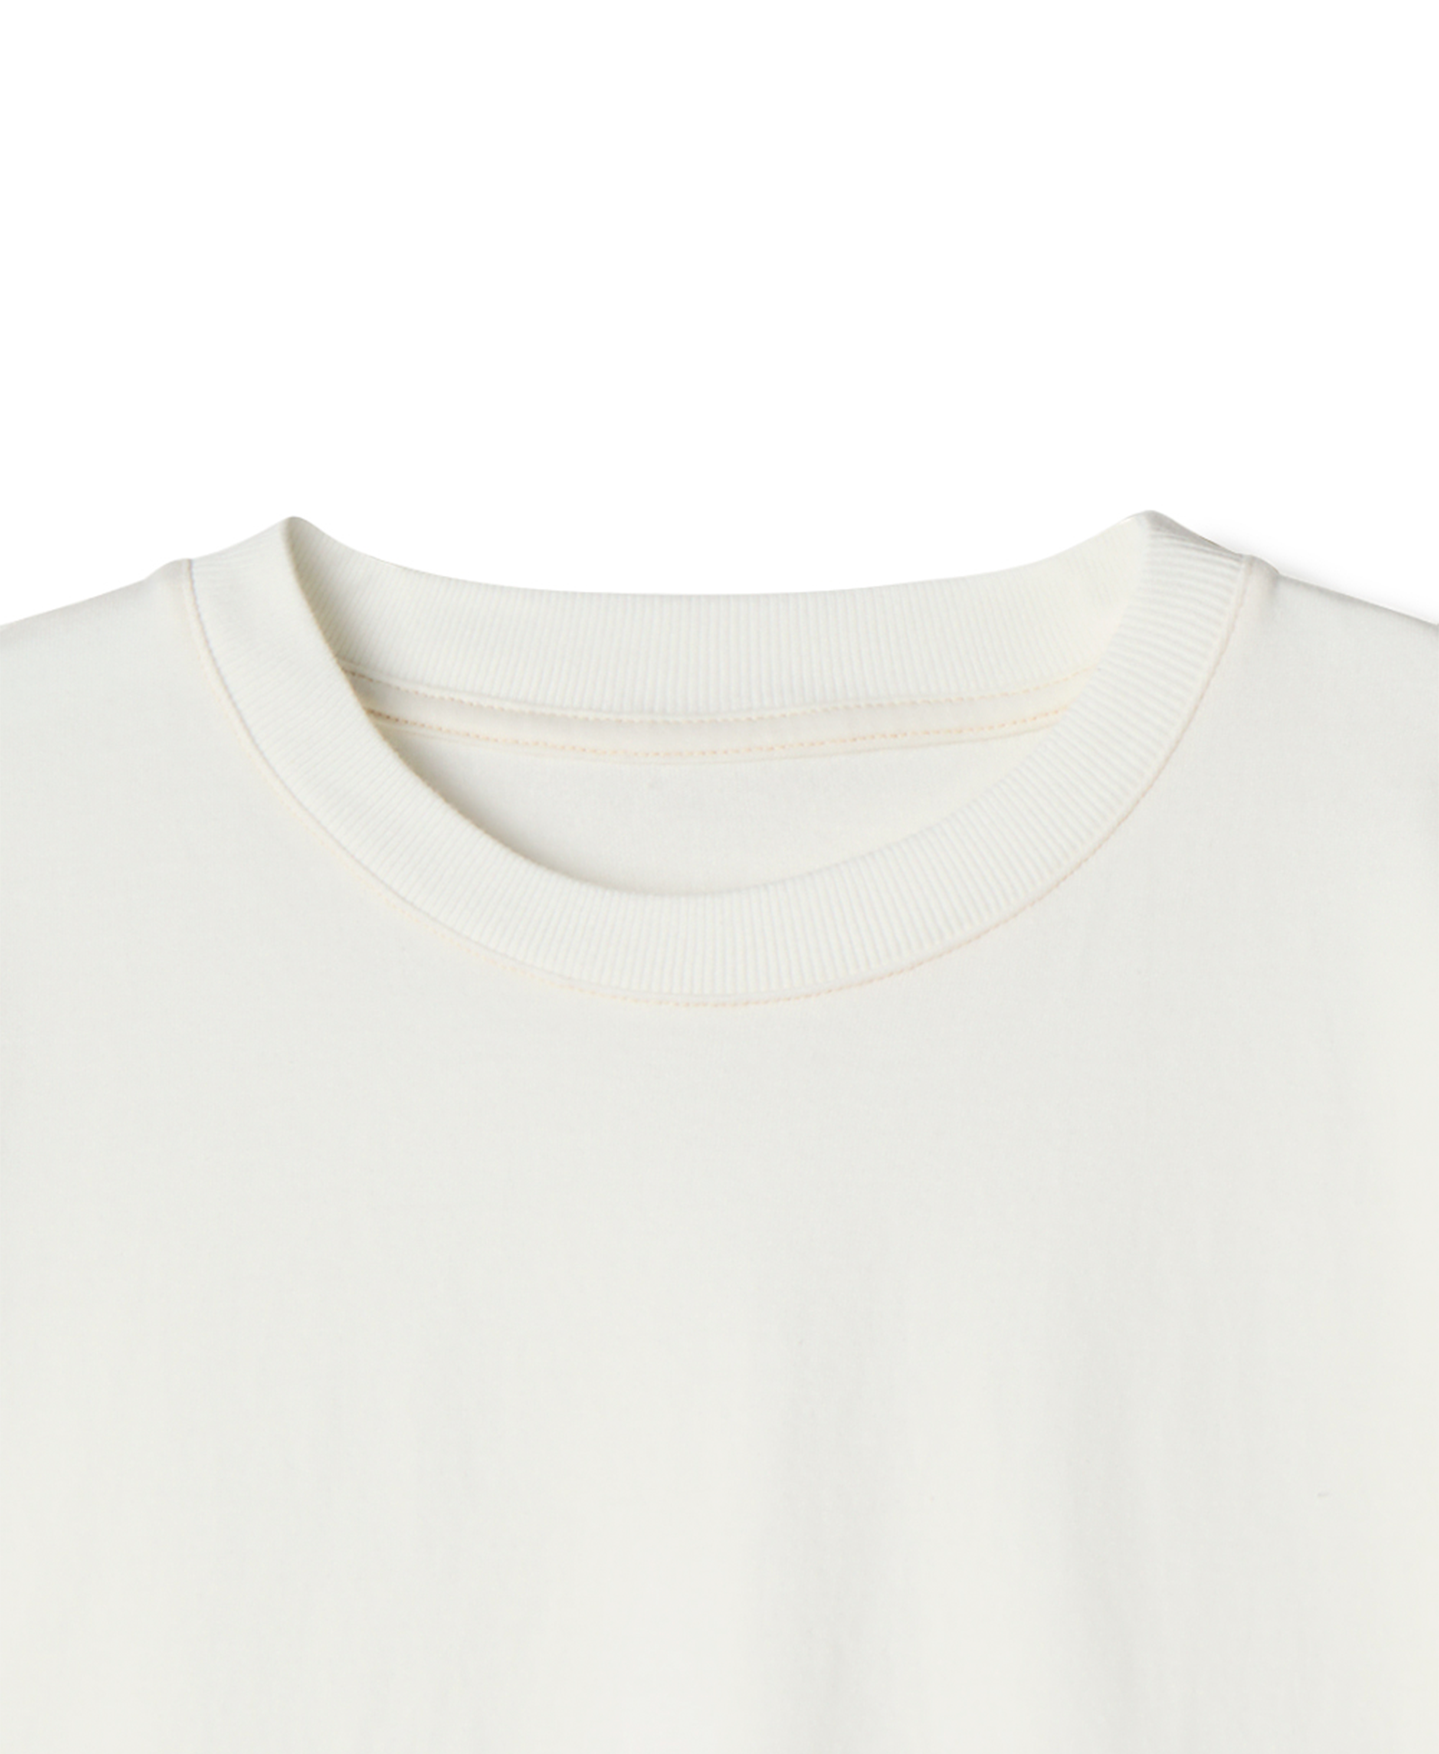 300 GSM 'Bone White' T-Shirt